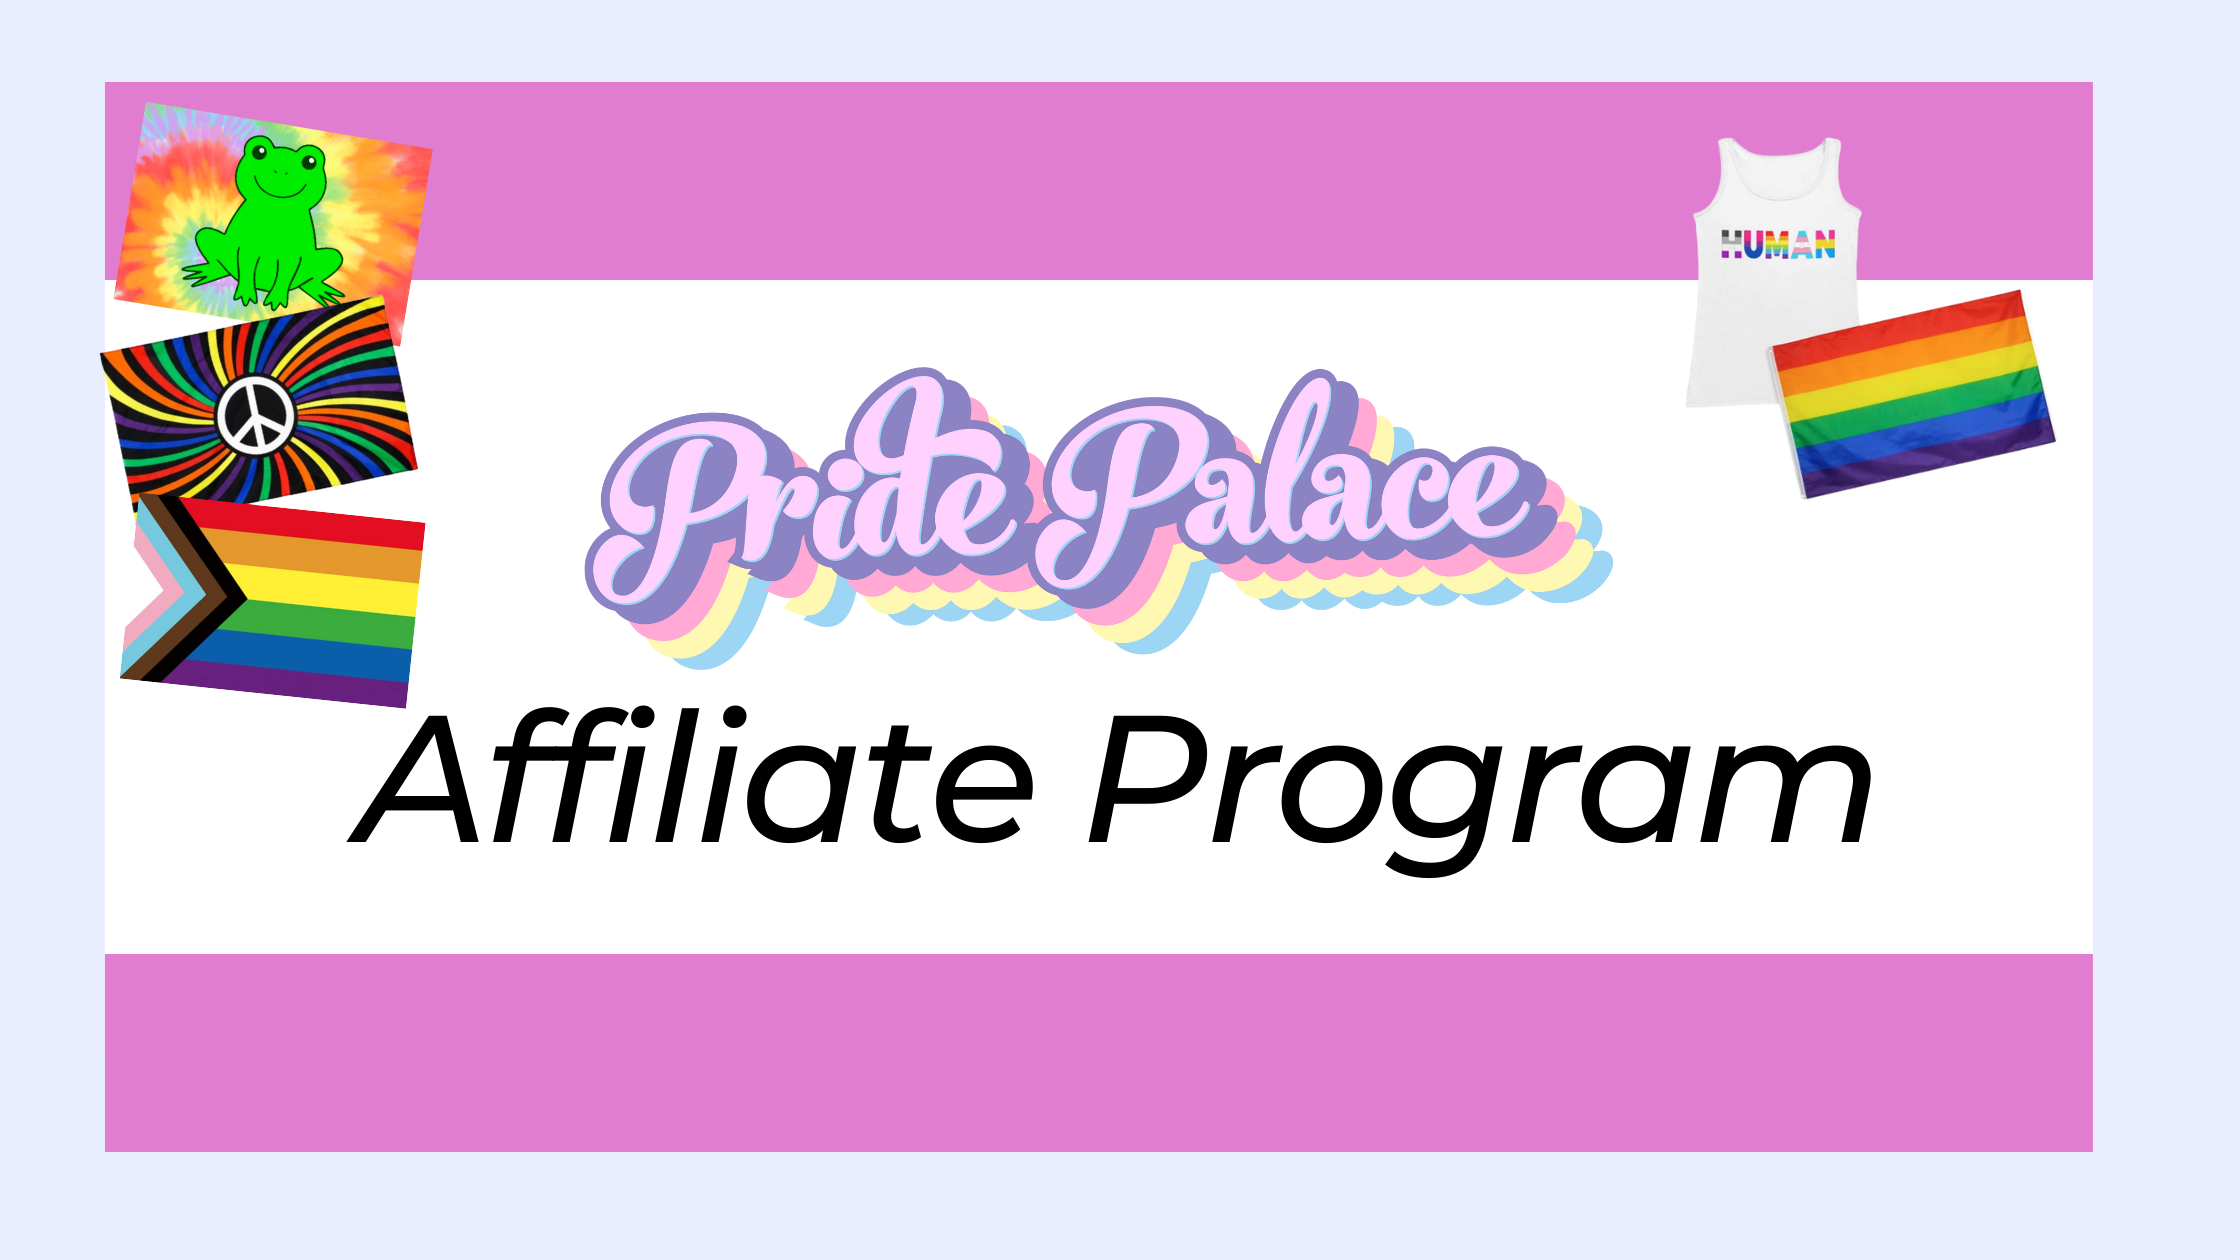 Pride Palace Affiliate Program